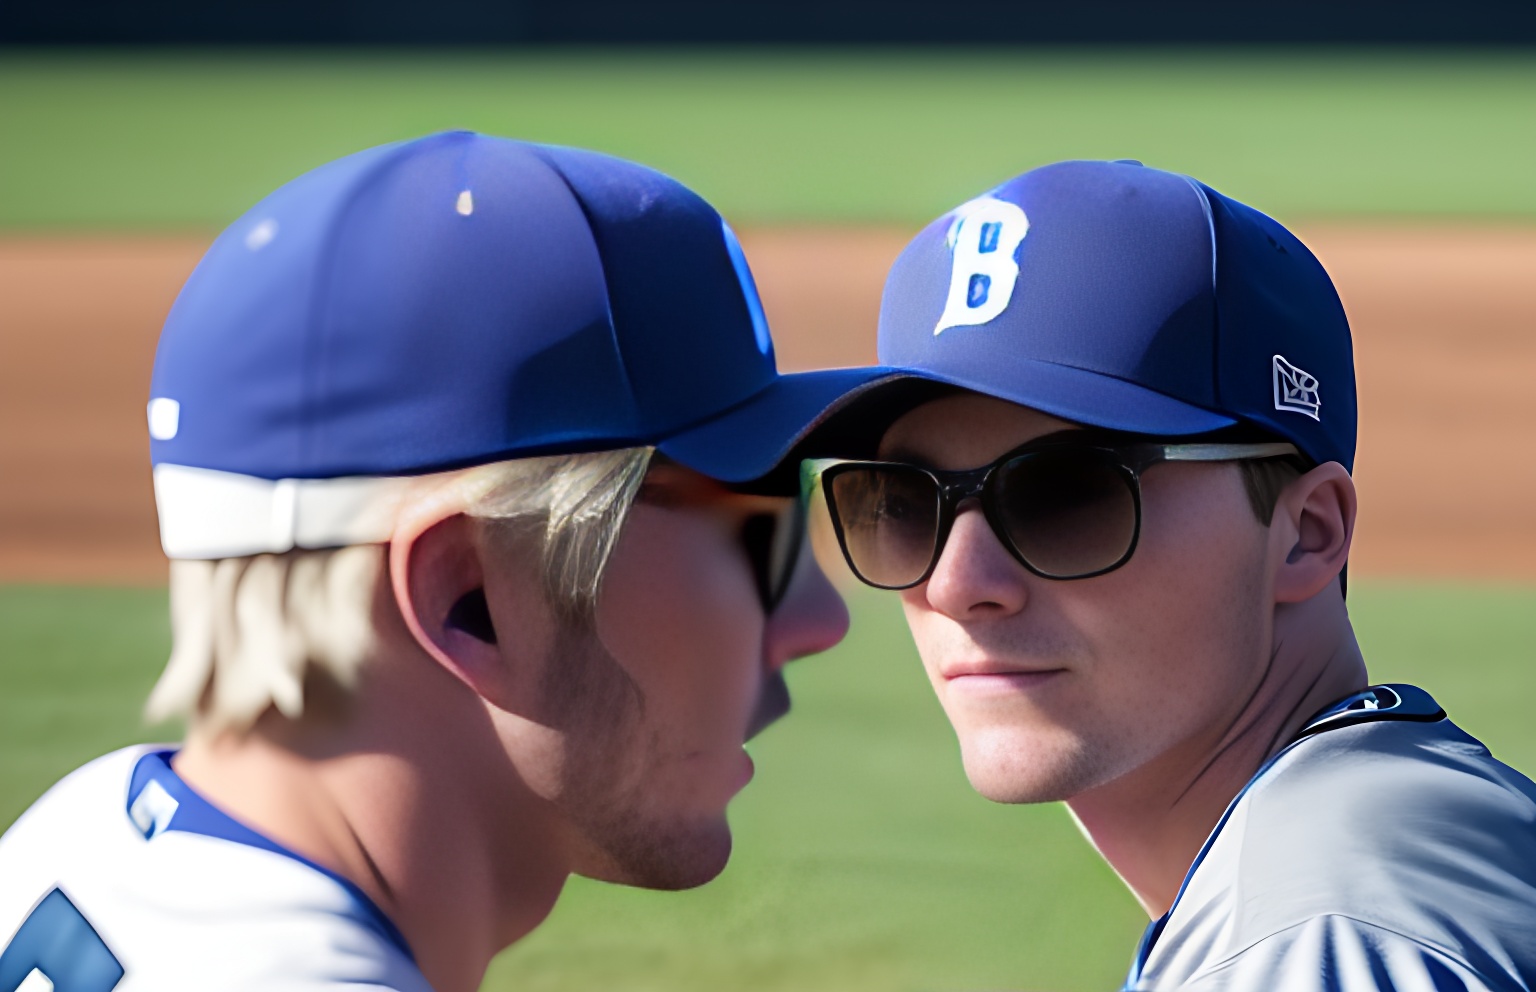 Can High School Baseball Pitchers Wear Sunglasses?